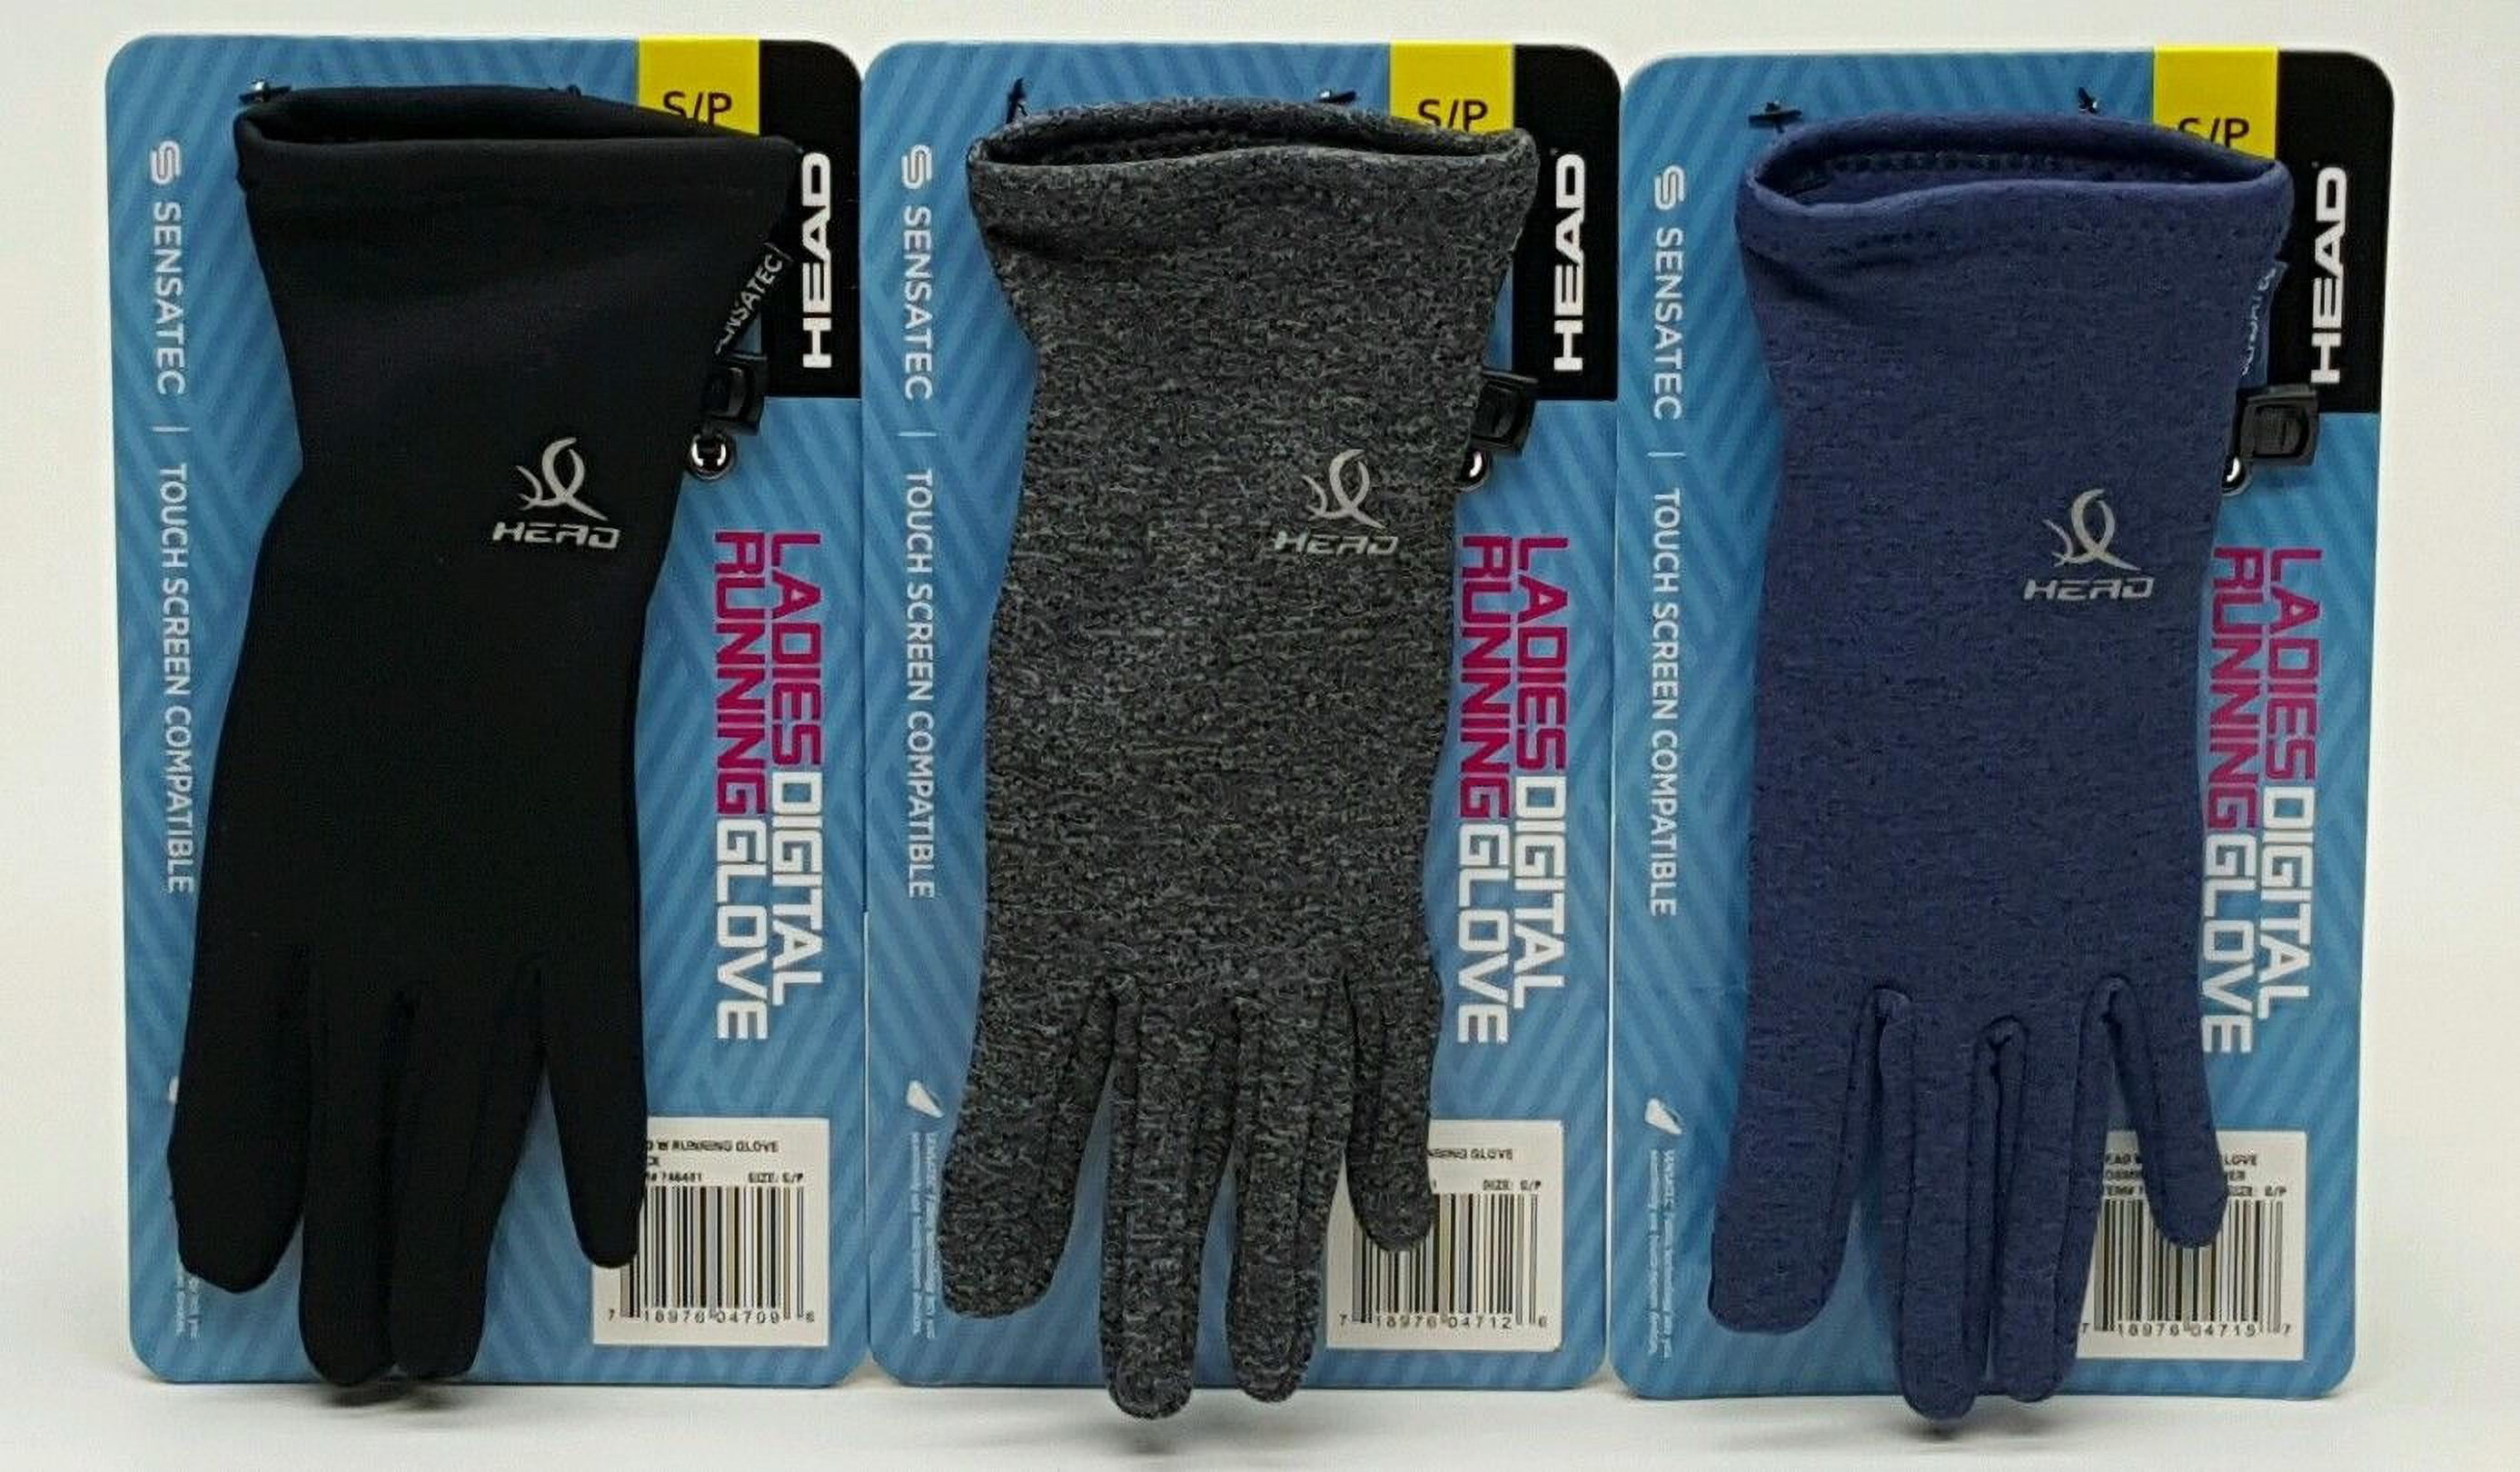 Head Women's Digital Sensatec Touchscreen Compatible Running Gloves Black Large 